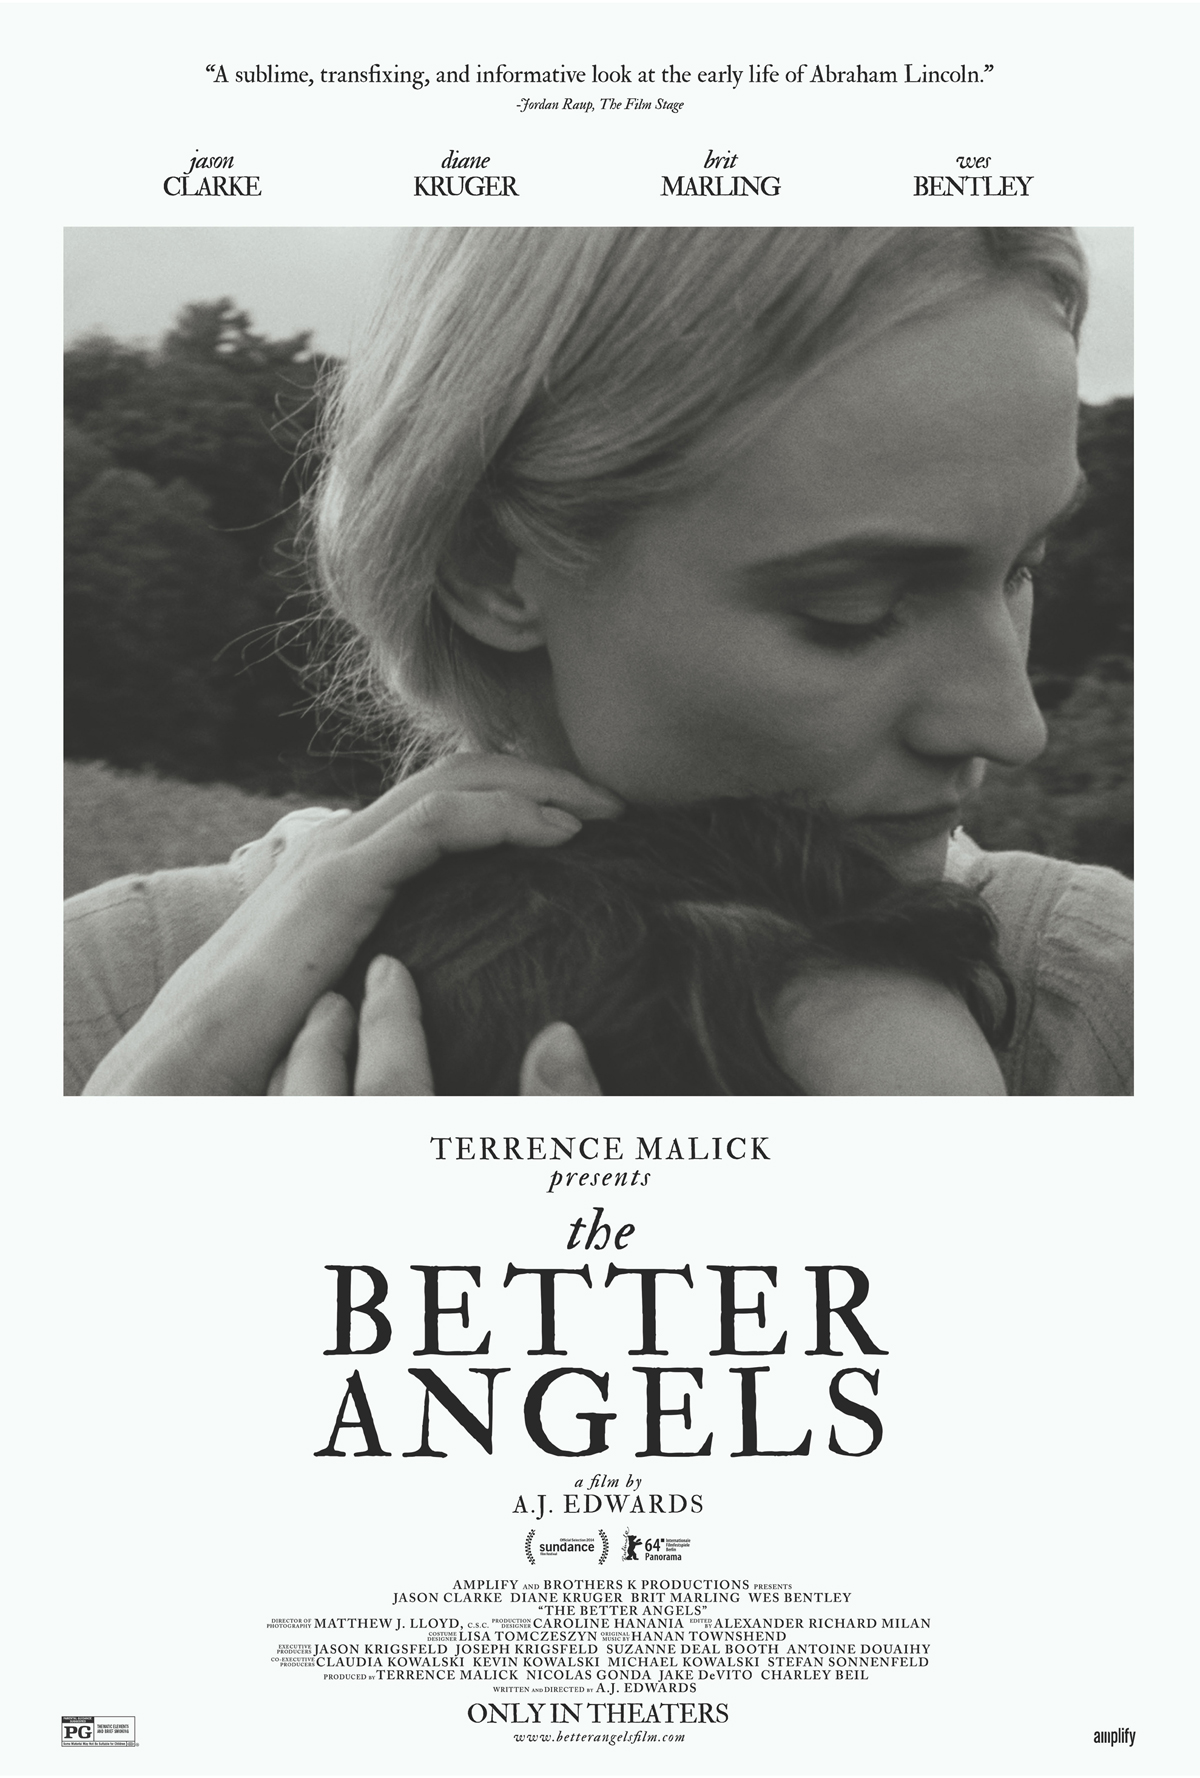 Diane Kruger and Braydon Denney in The Better Angels (2014)